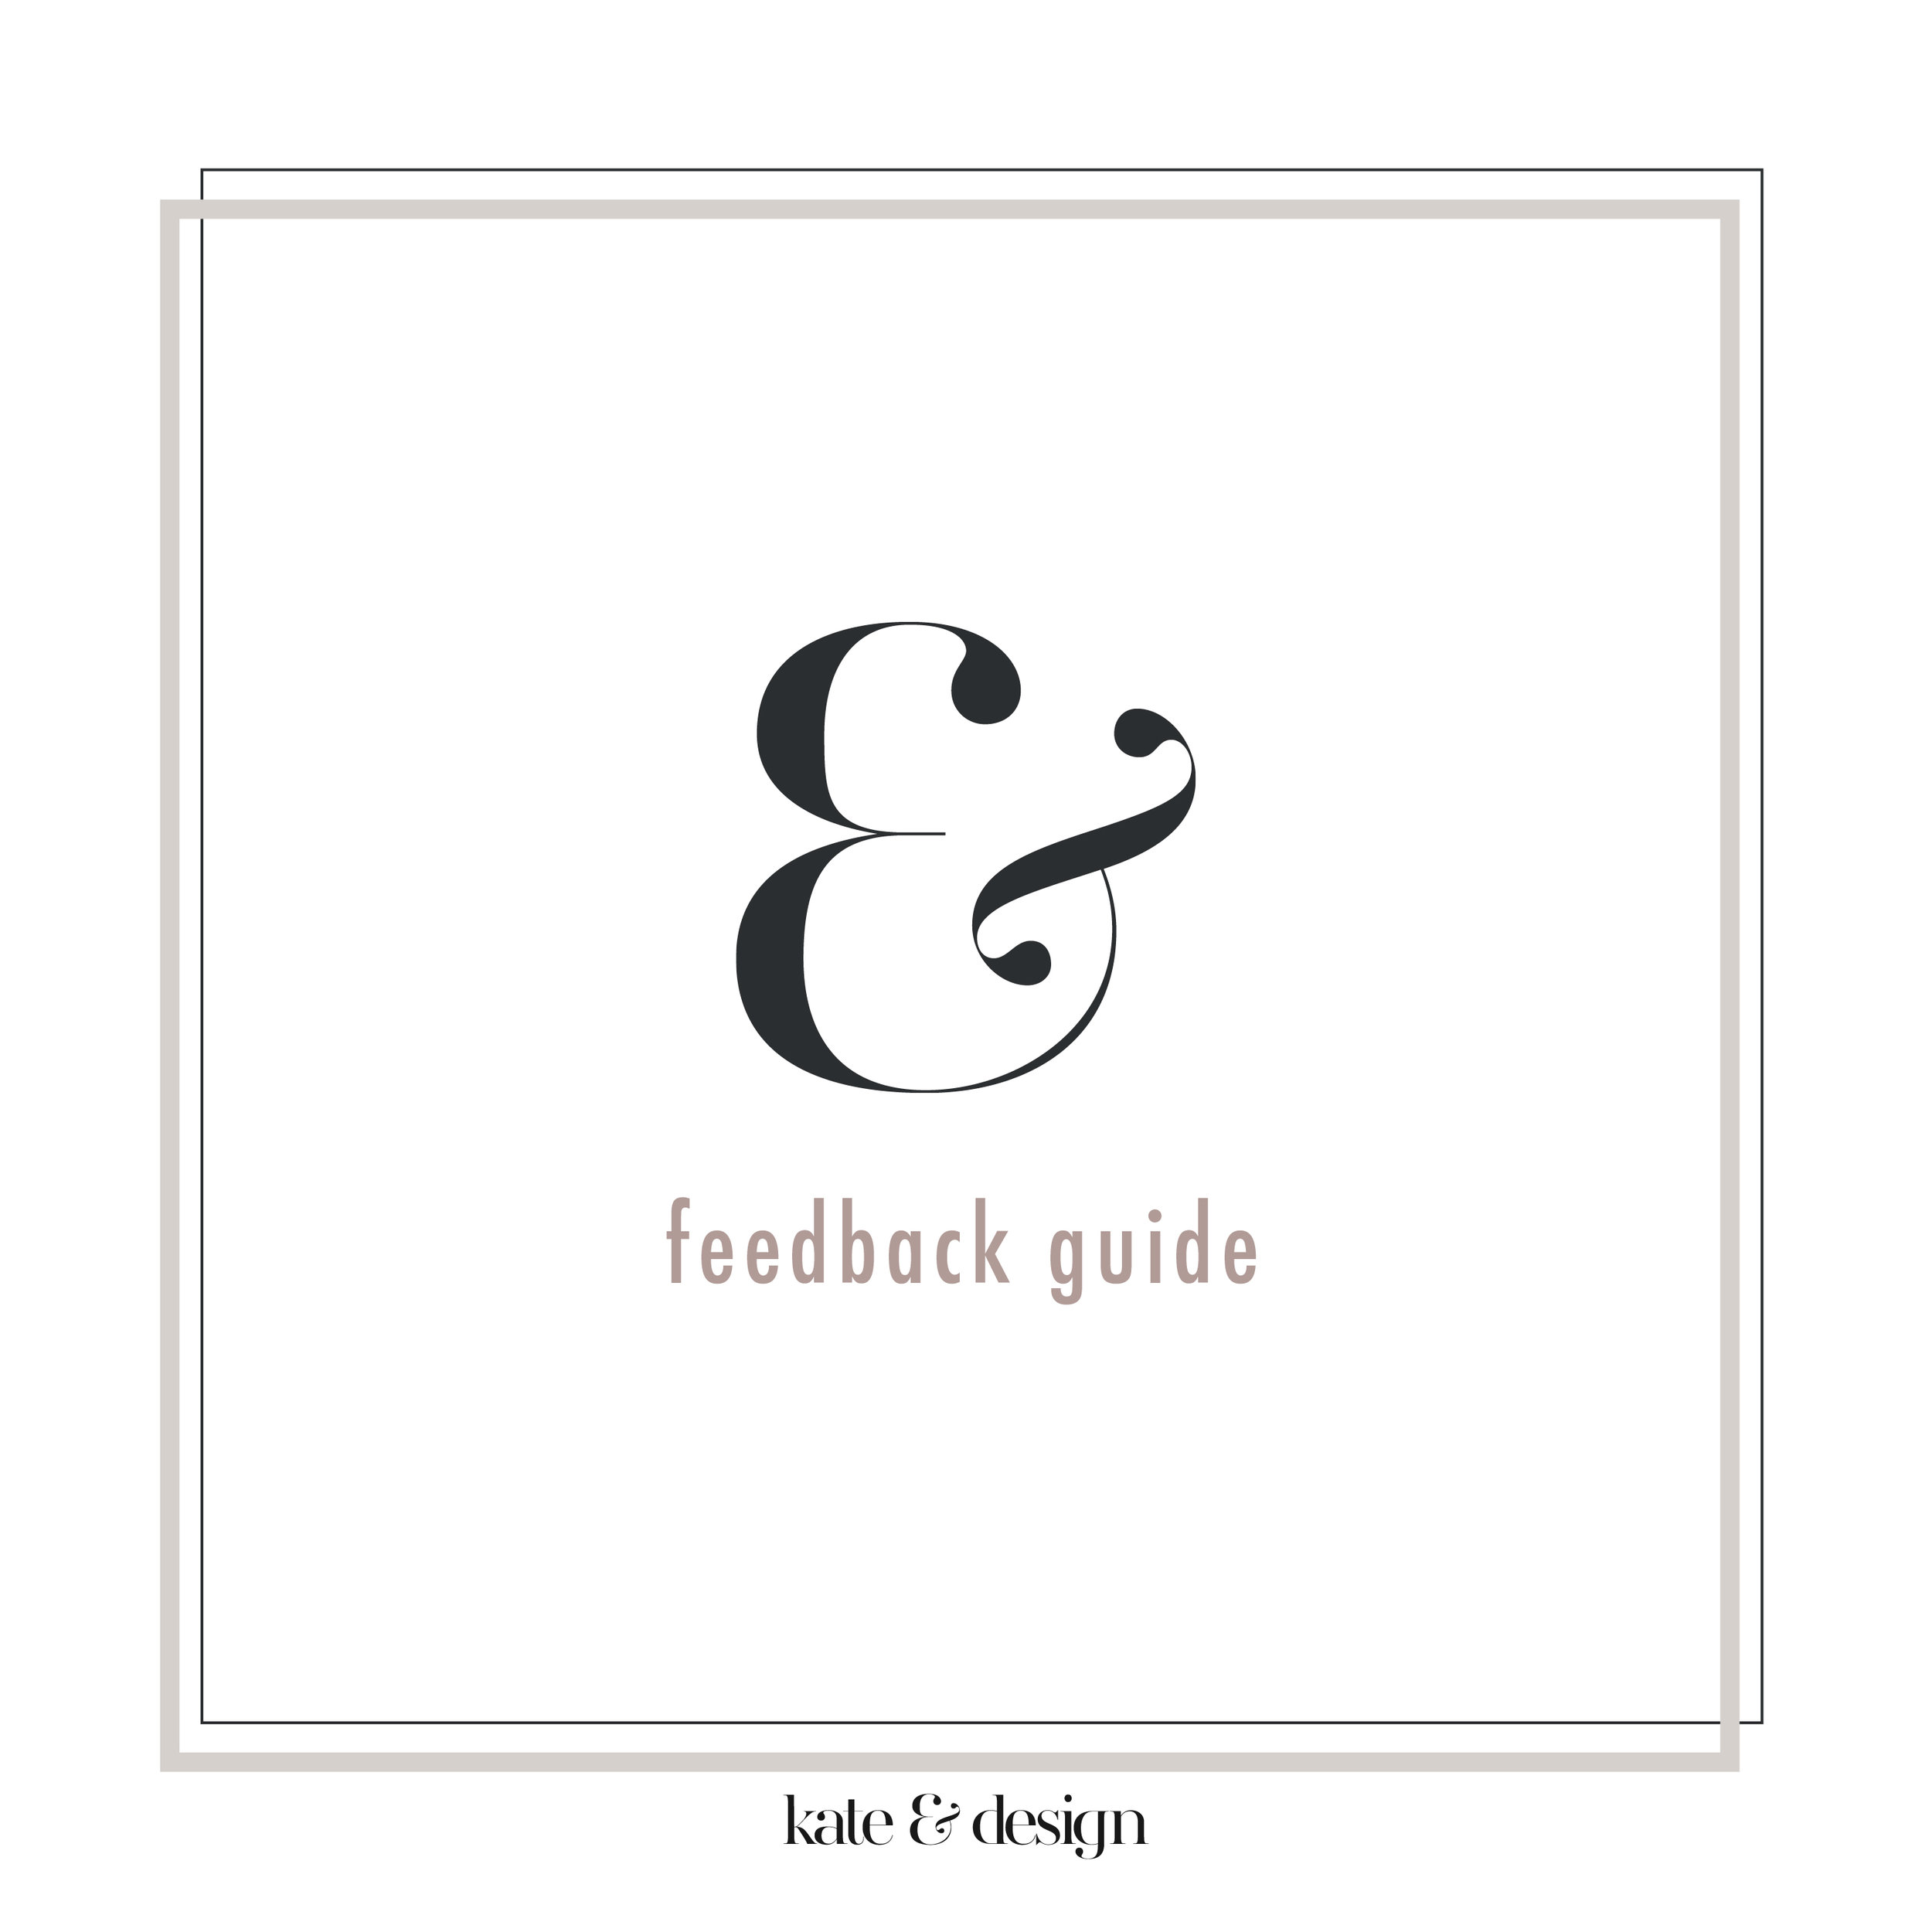 Copy of Copy of feedback guide